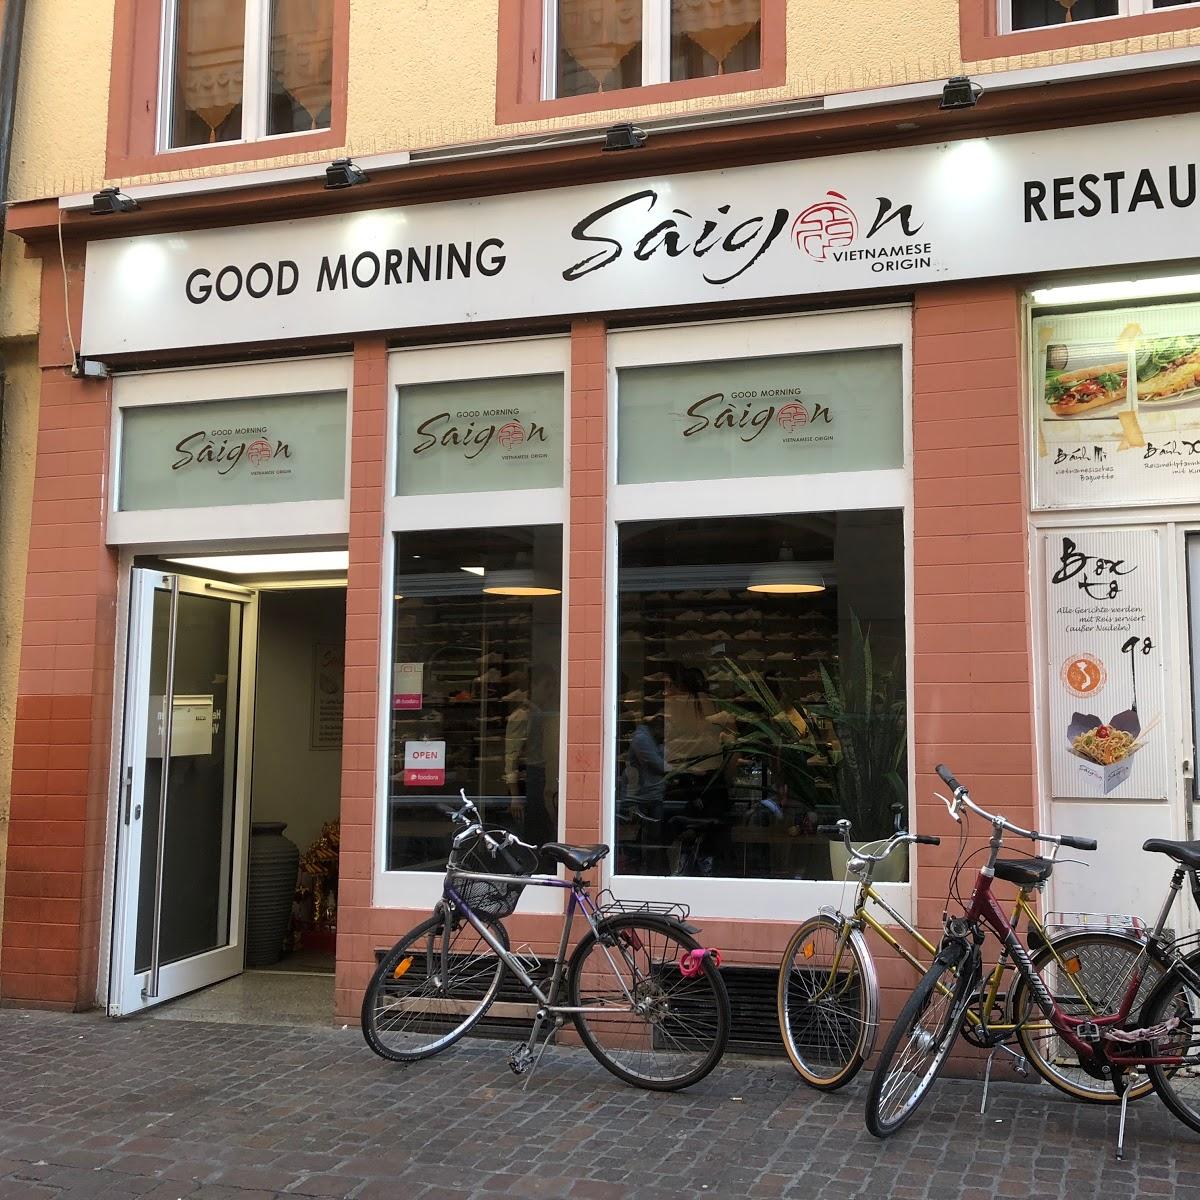 Restaurant "Good Morning Saigon" in Freiburg im Breisgau